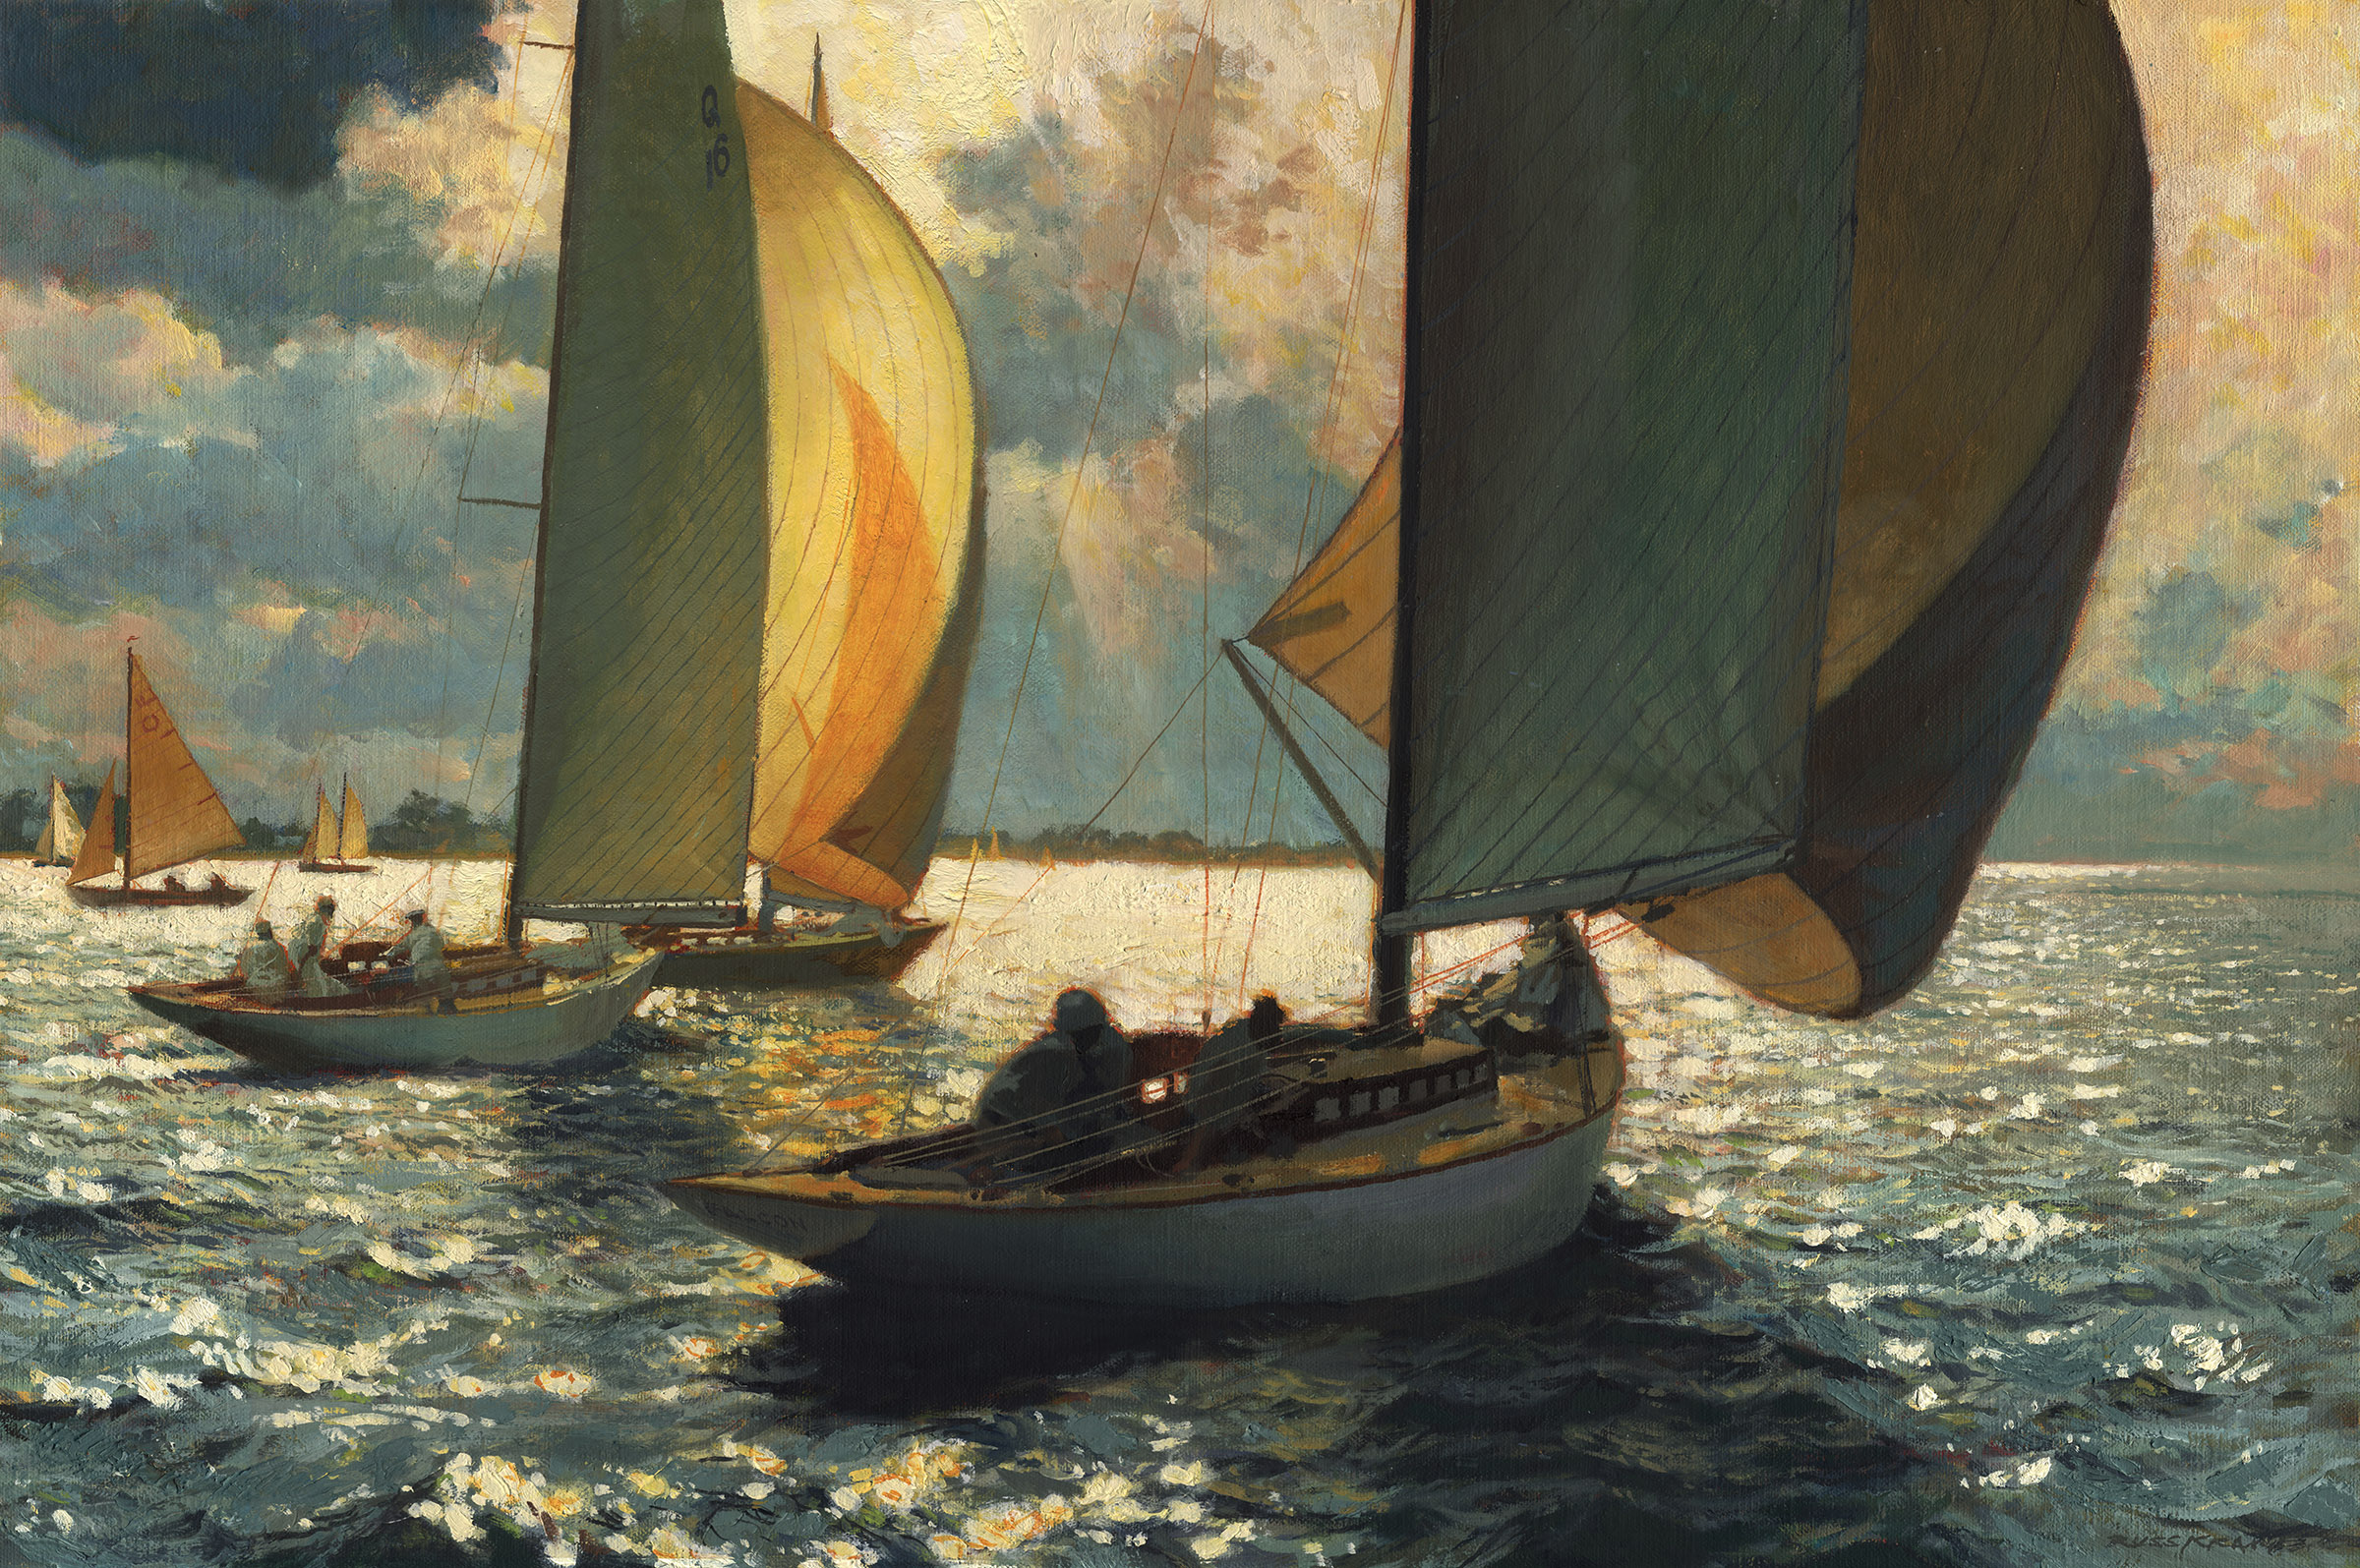 Sailboat Paintings